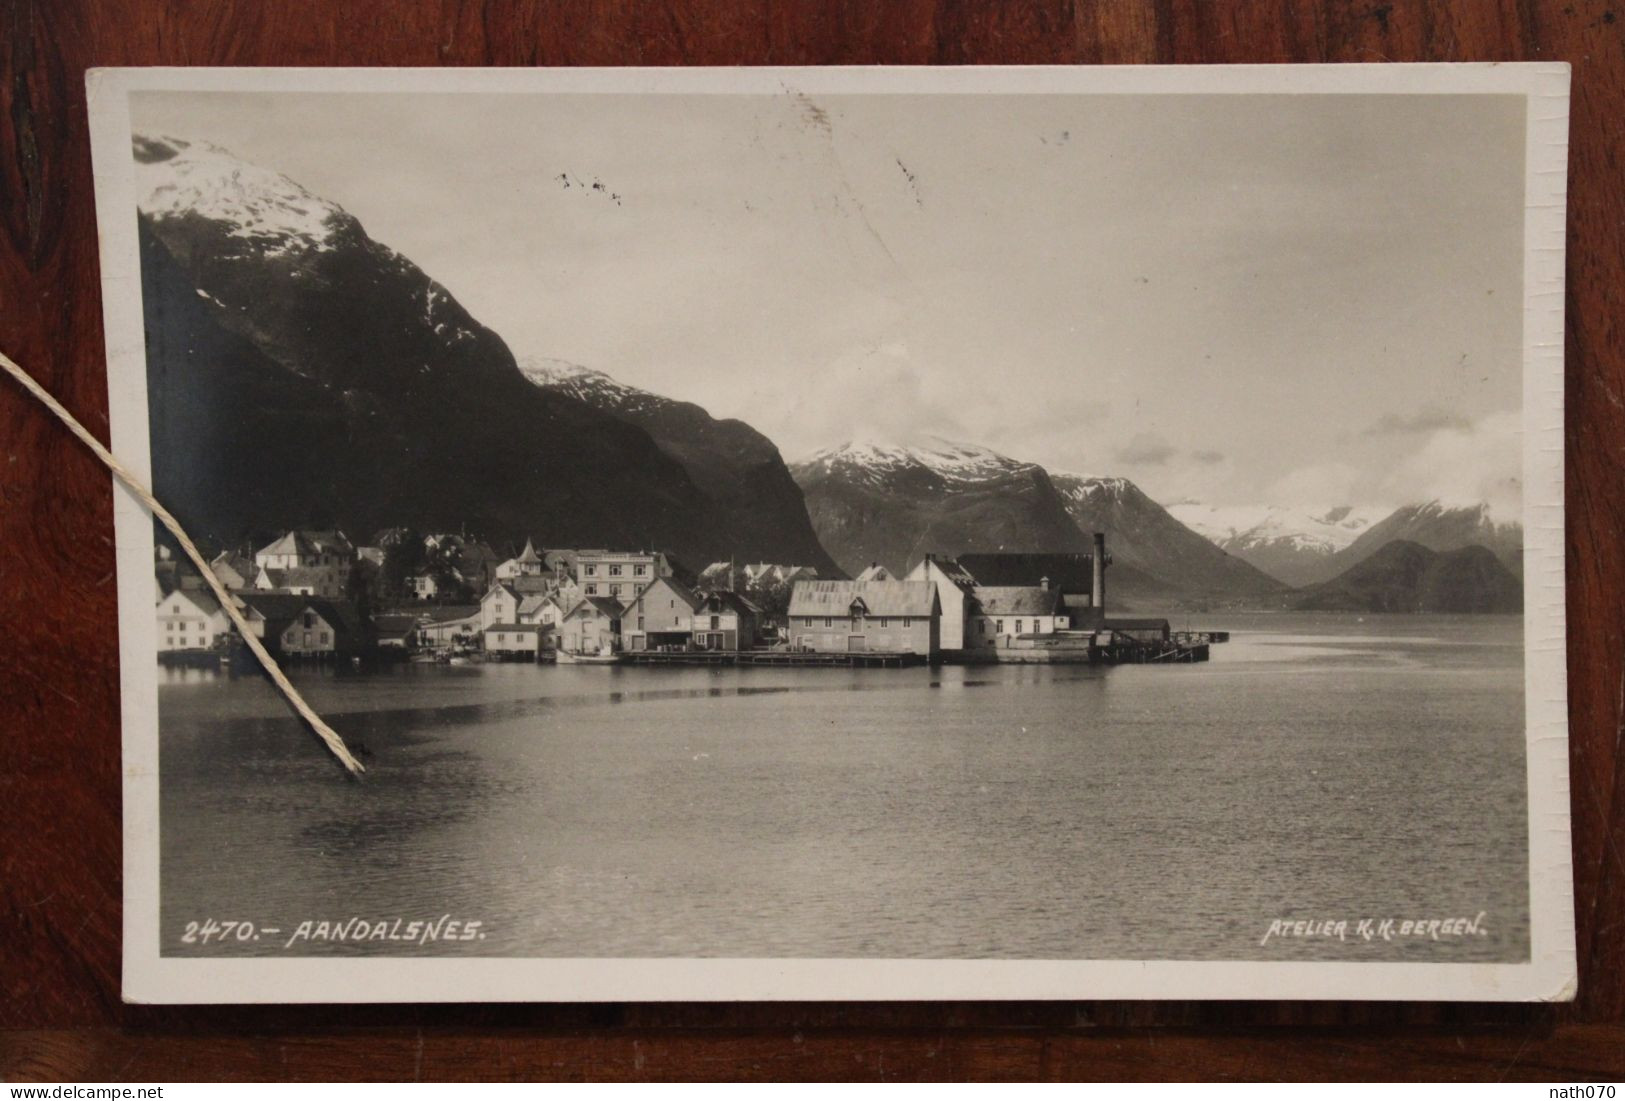 AK 1935 Åndalsnes Harbour Nordland Cpa Norvège Norway Norvegen - Norvège